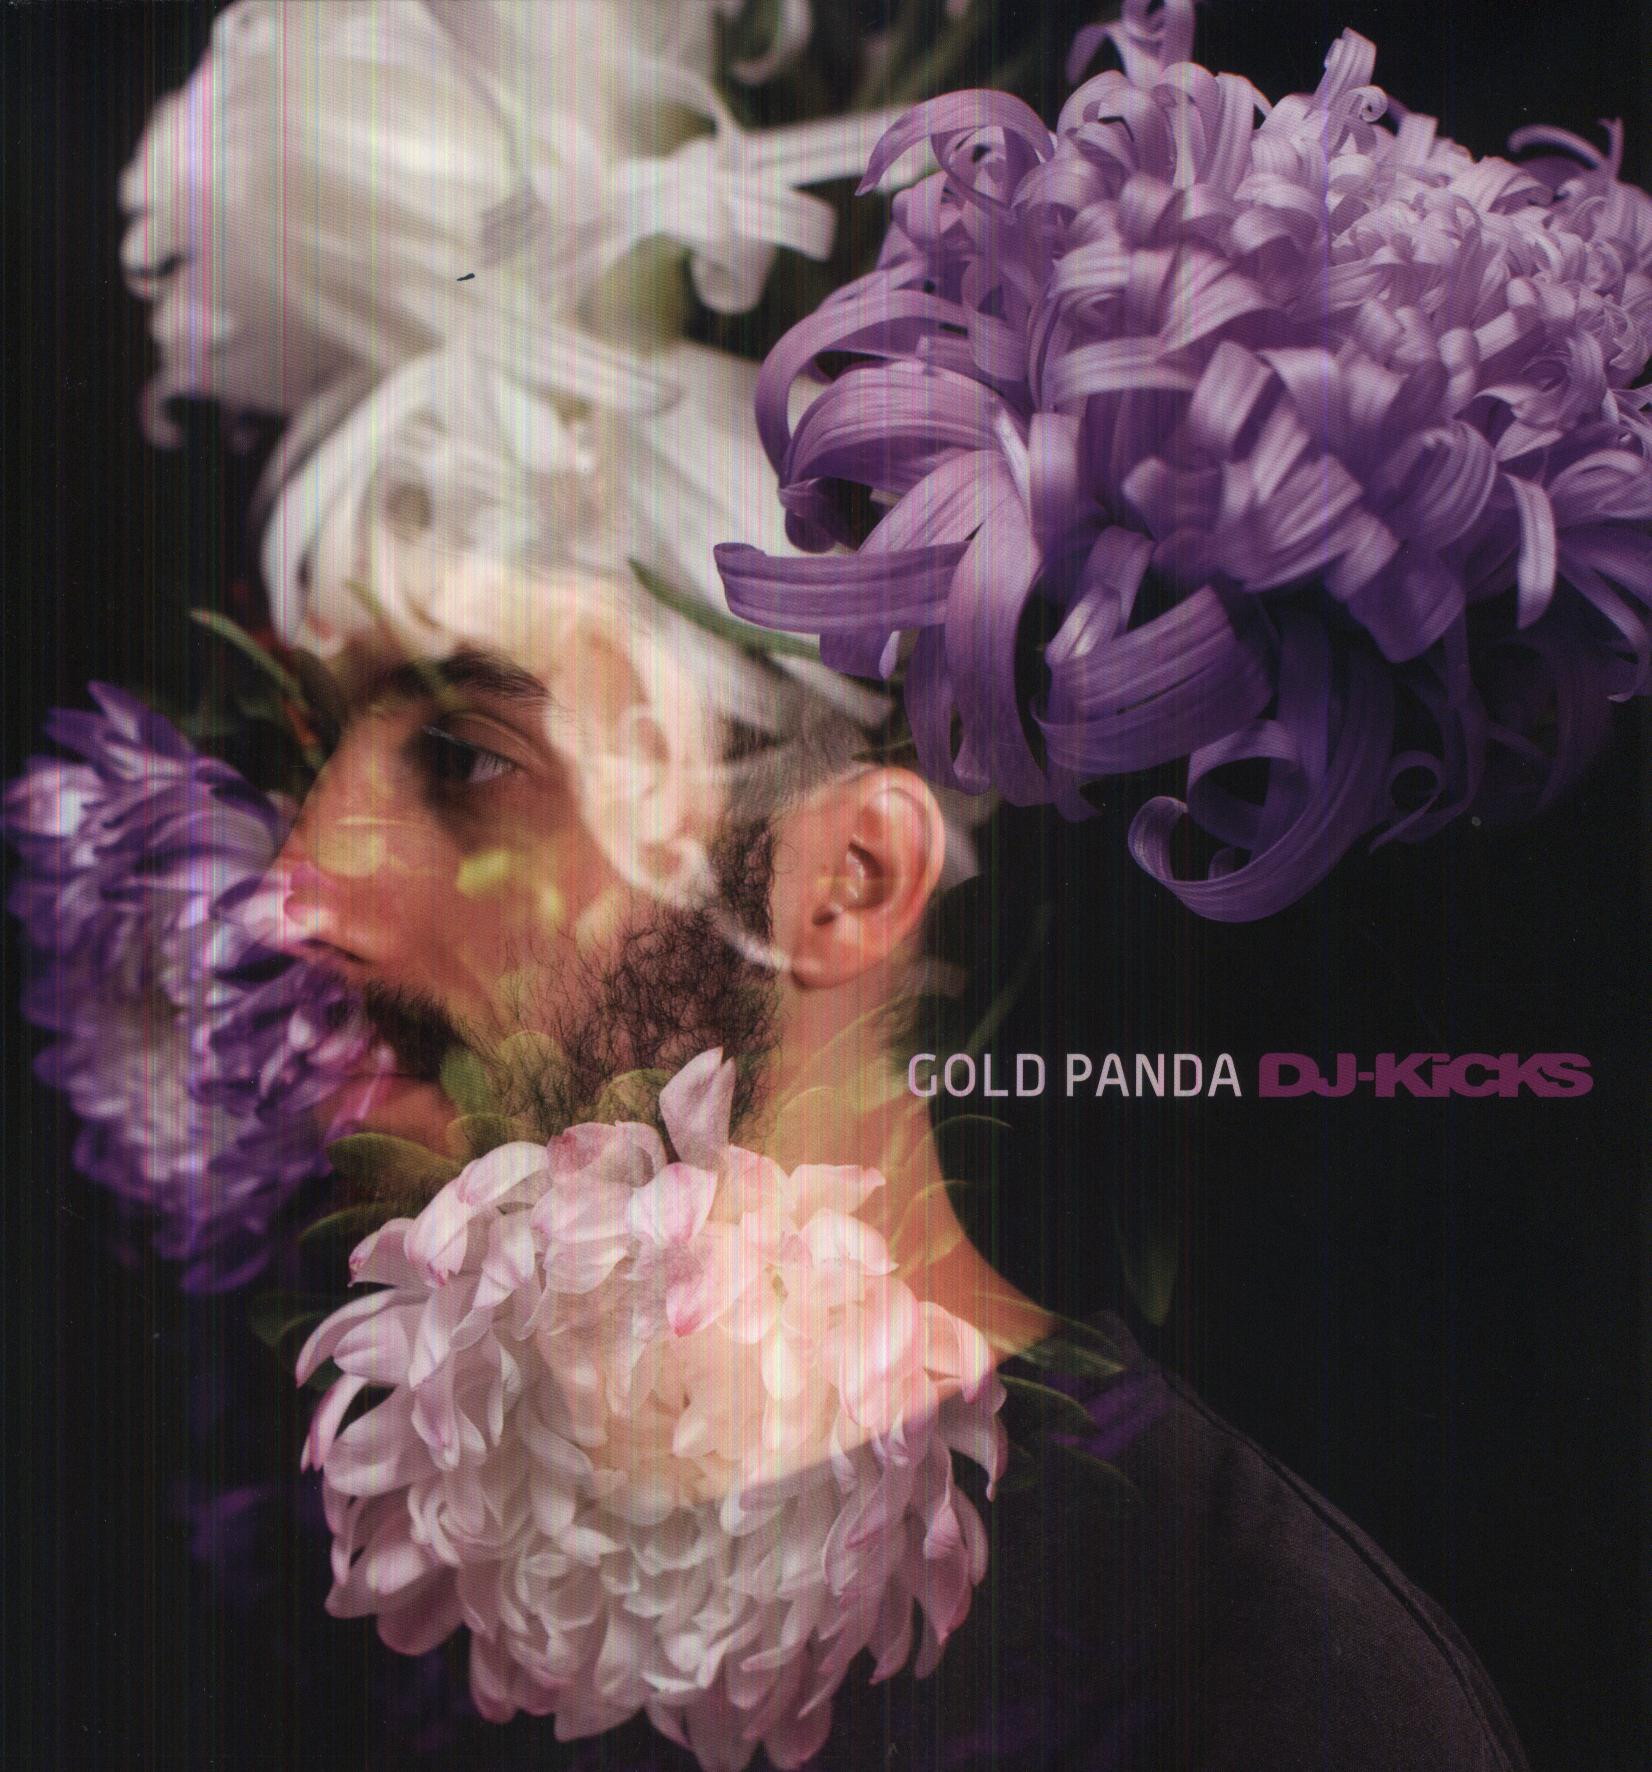 GOLD PANDA DJ-KICKS